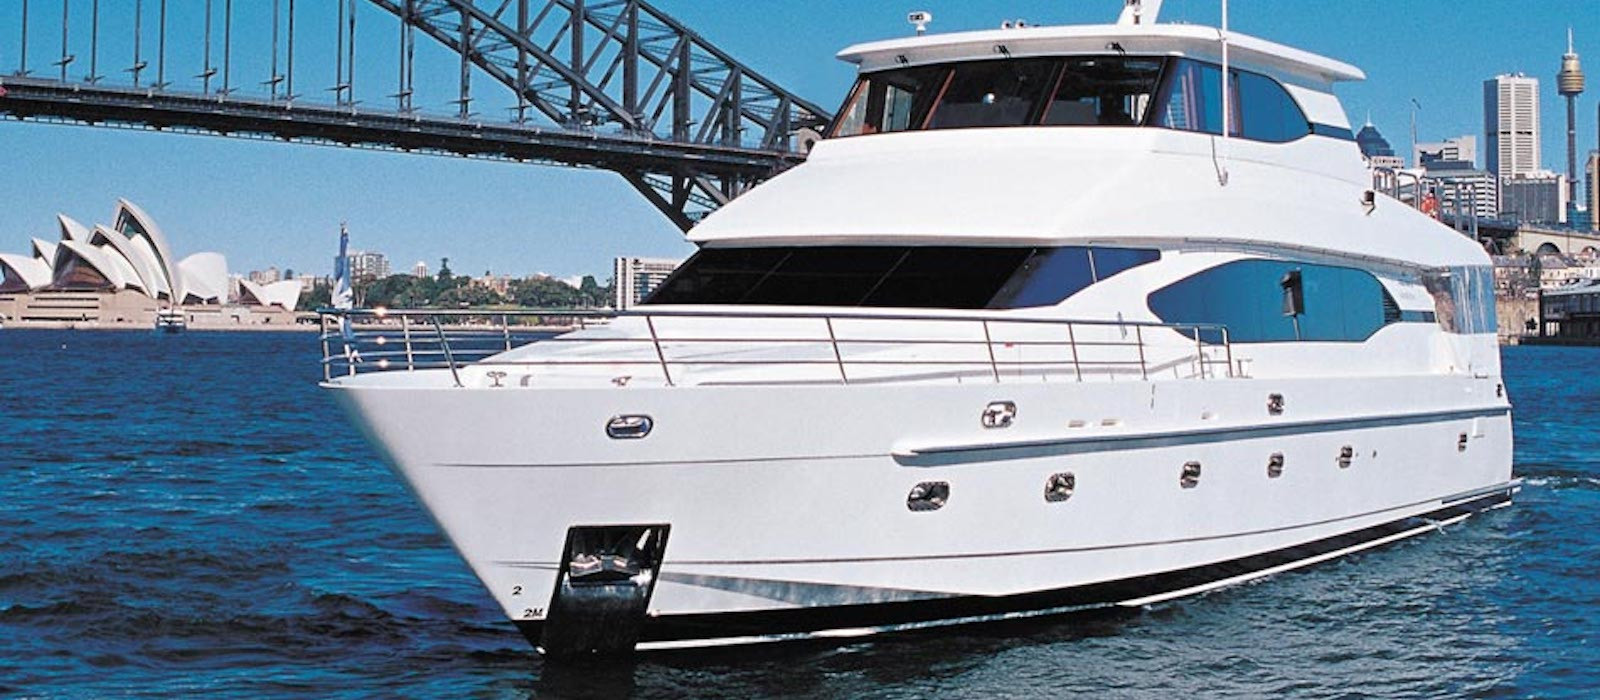 Oceanos luxury boat hire with Harbour Bridge background